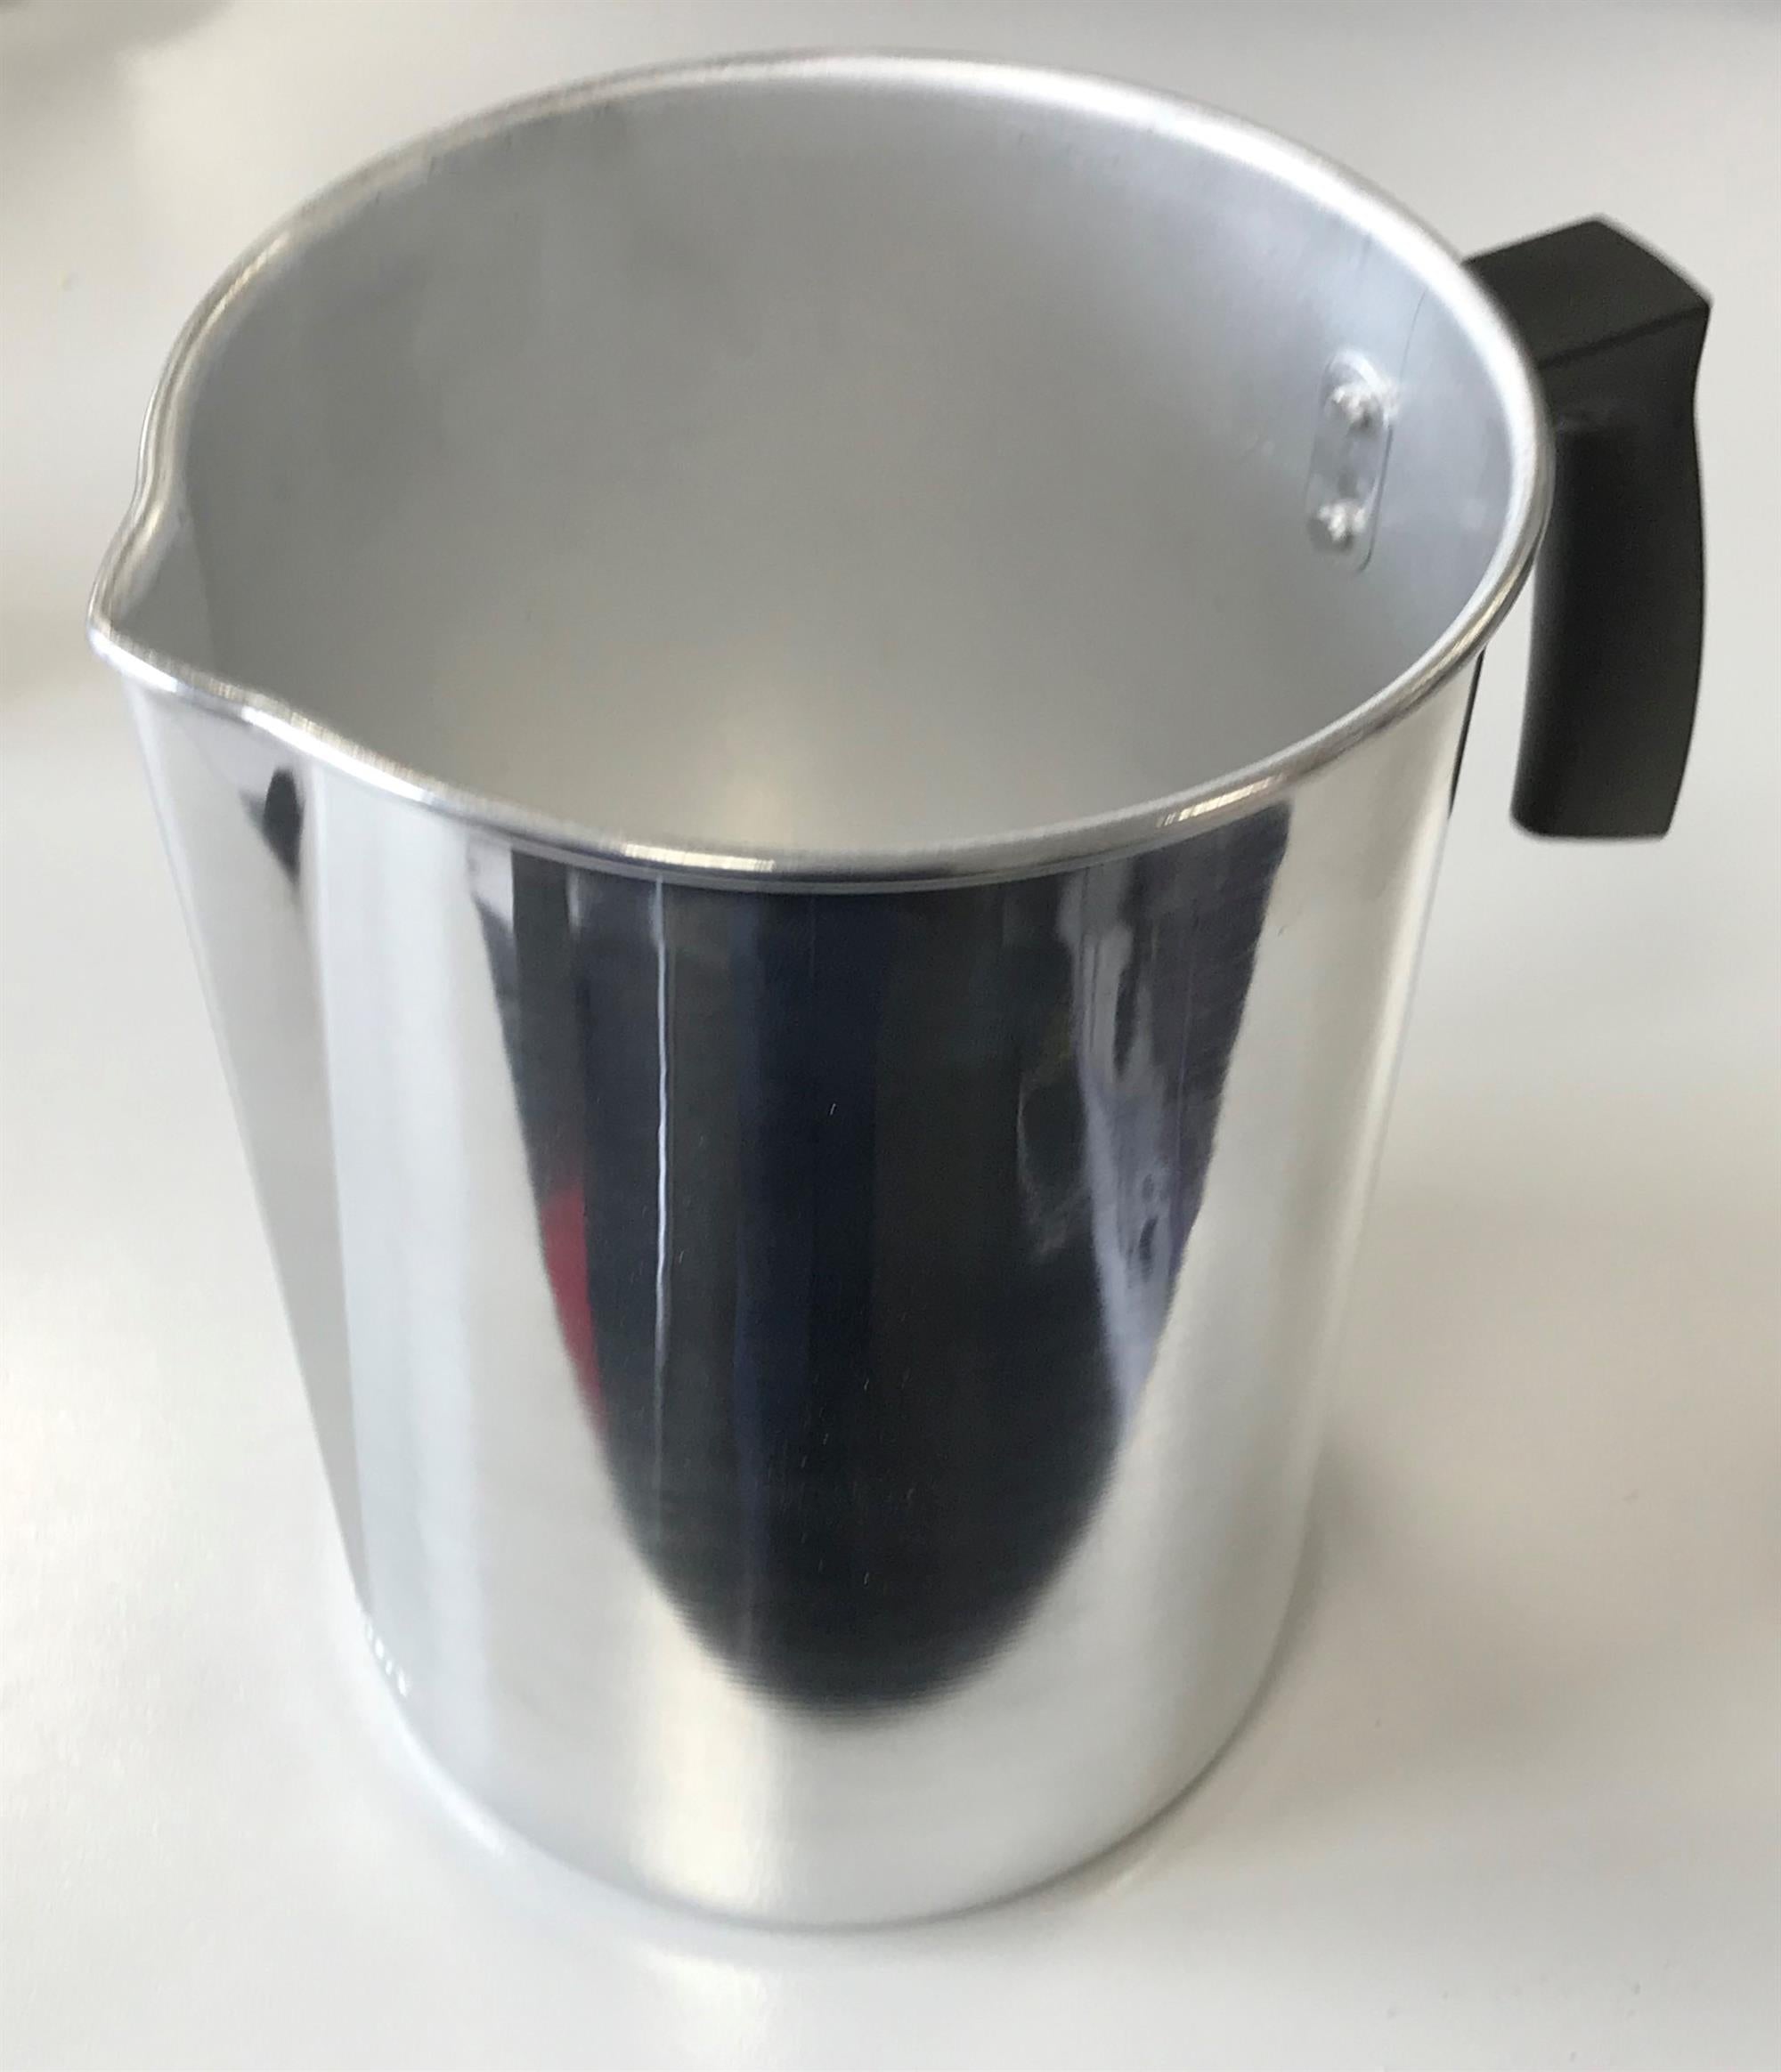 3L Wax Melting Pot Candle Pouring Jug W/ Heat-Resisting Handle